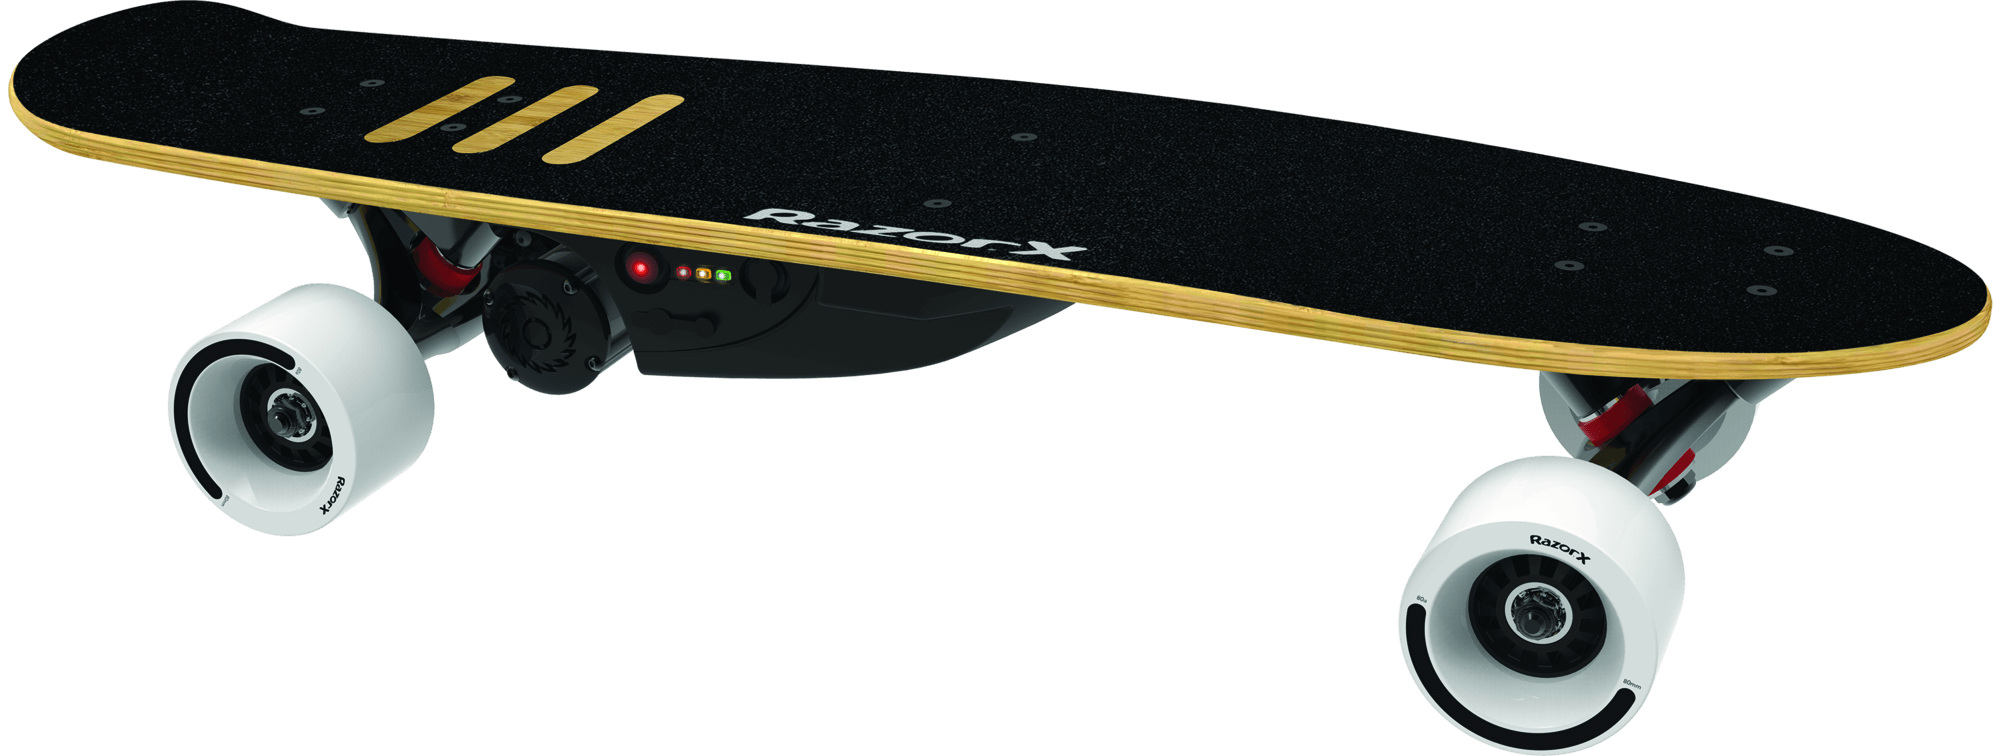 Razor Cruiser eléctricamente skateboard nuevo embalaje original negro 